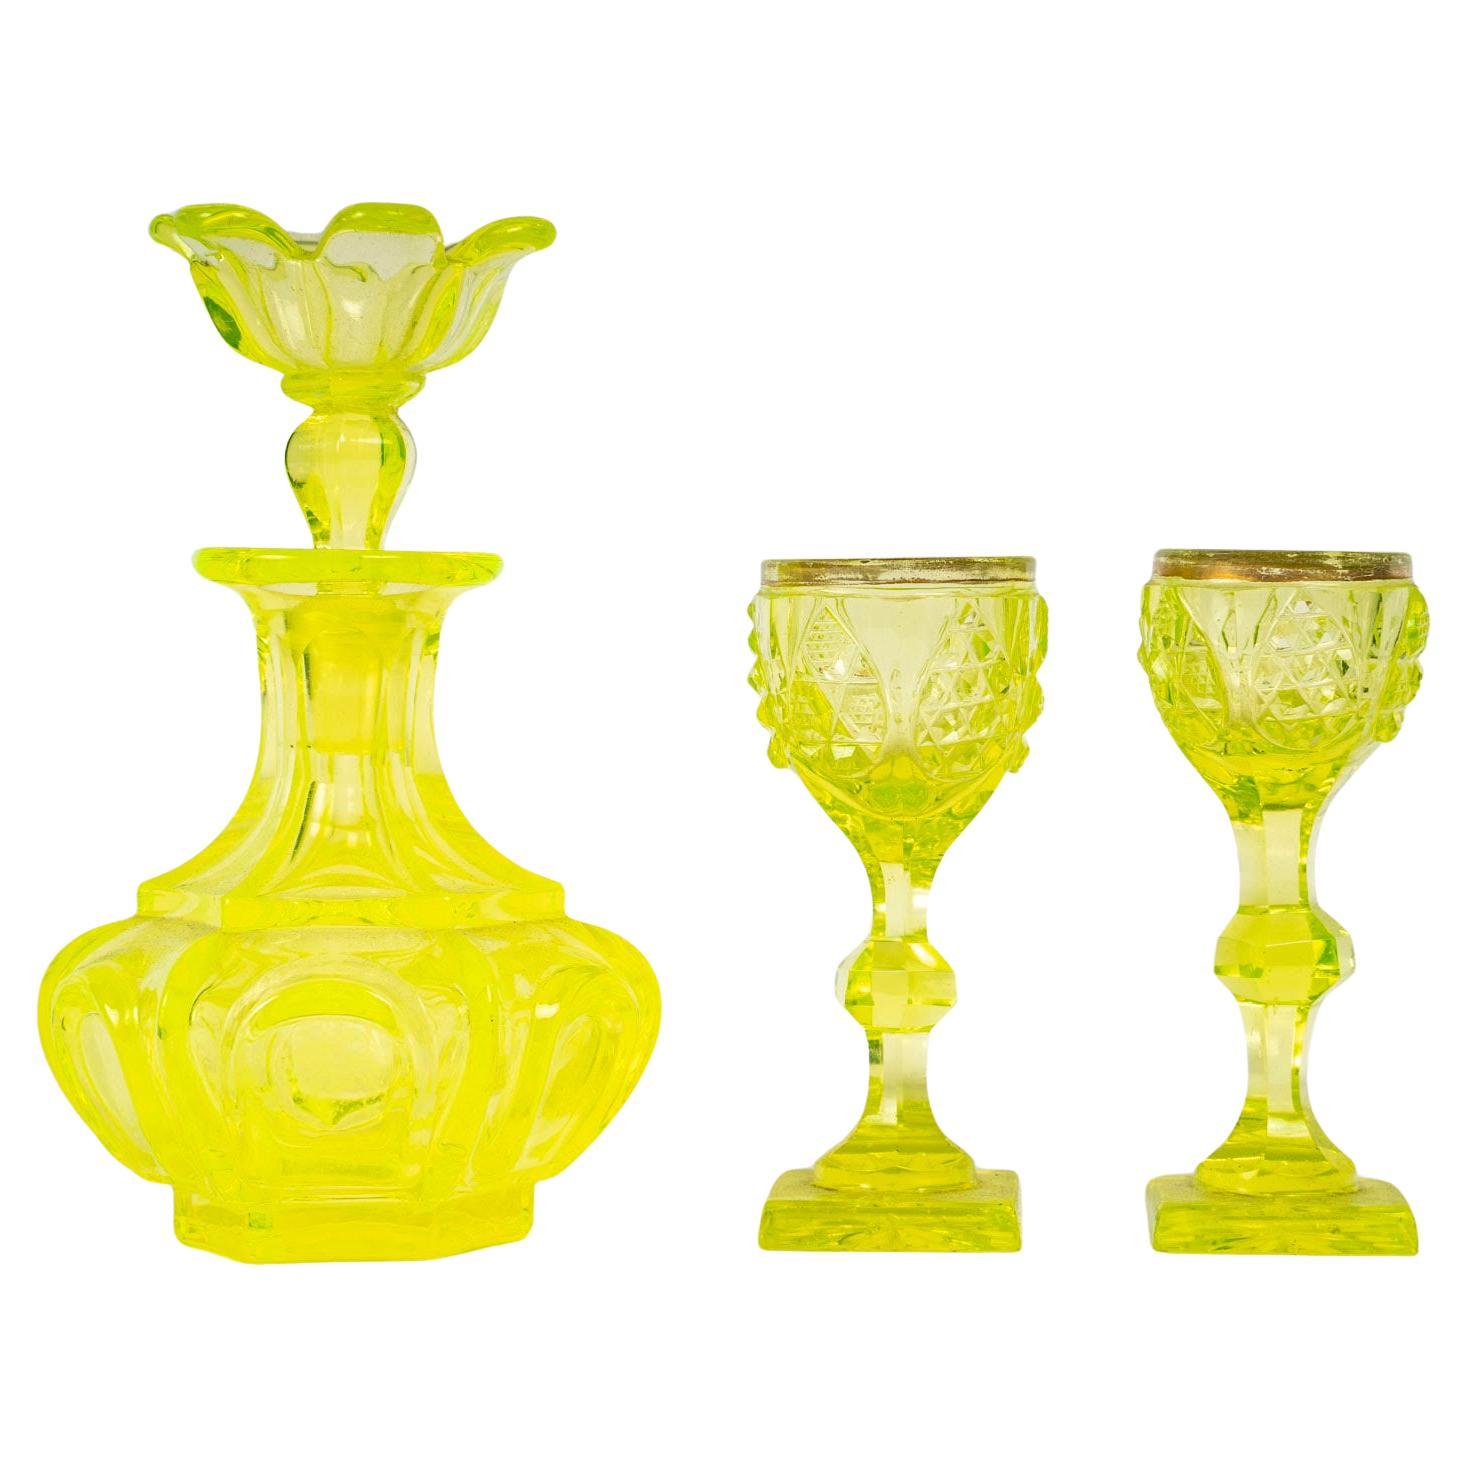 Bouteille et 2 verres en cristal de Bohême taillé jaune, période Napoléon III.  en vente